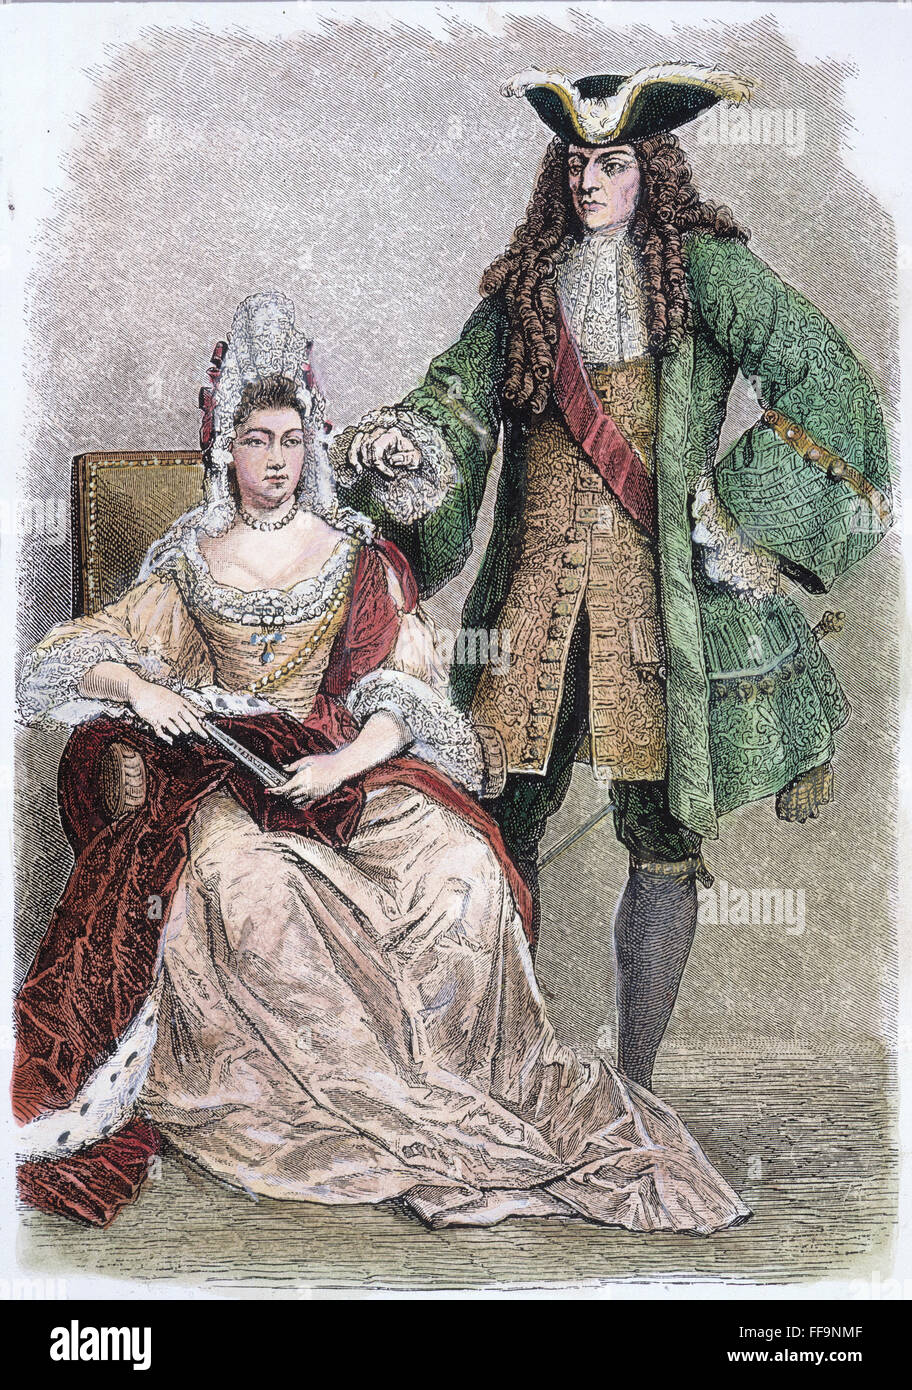 WILLIAM III & MARY II /nof England: colored wood engraving, 19th century. Stock Photo